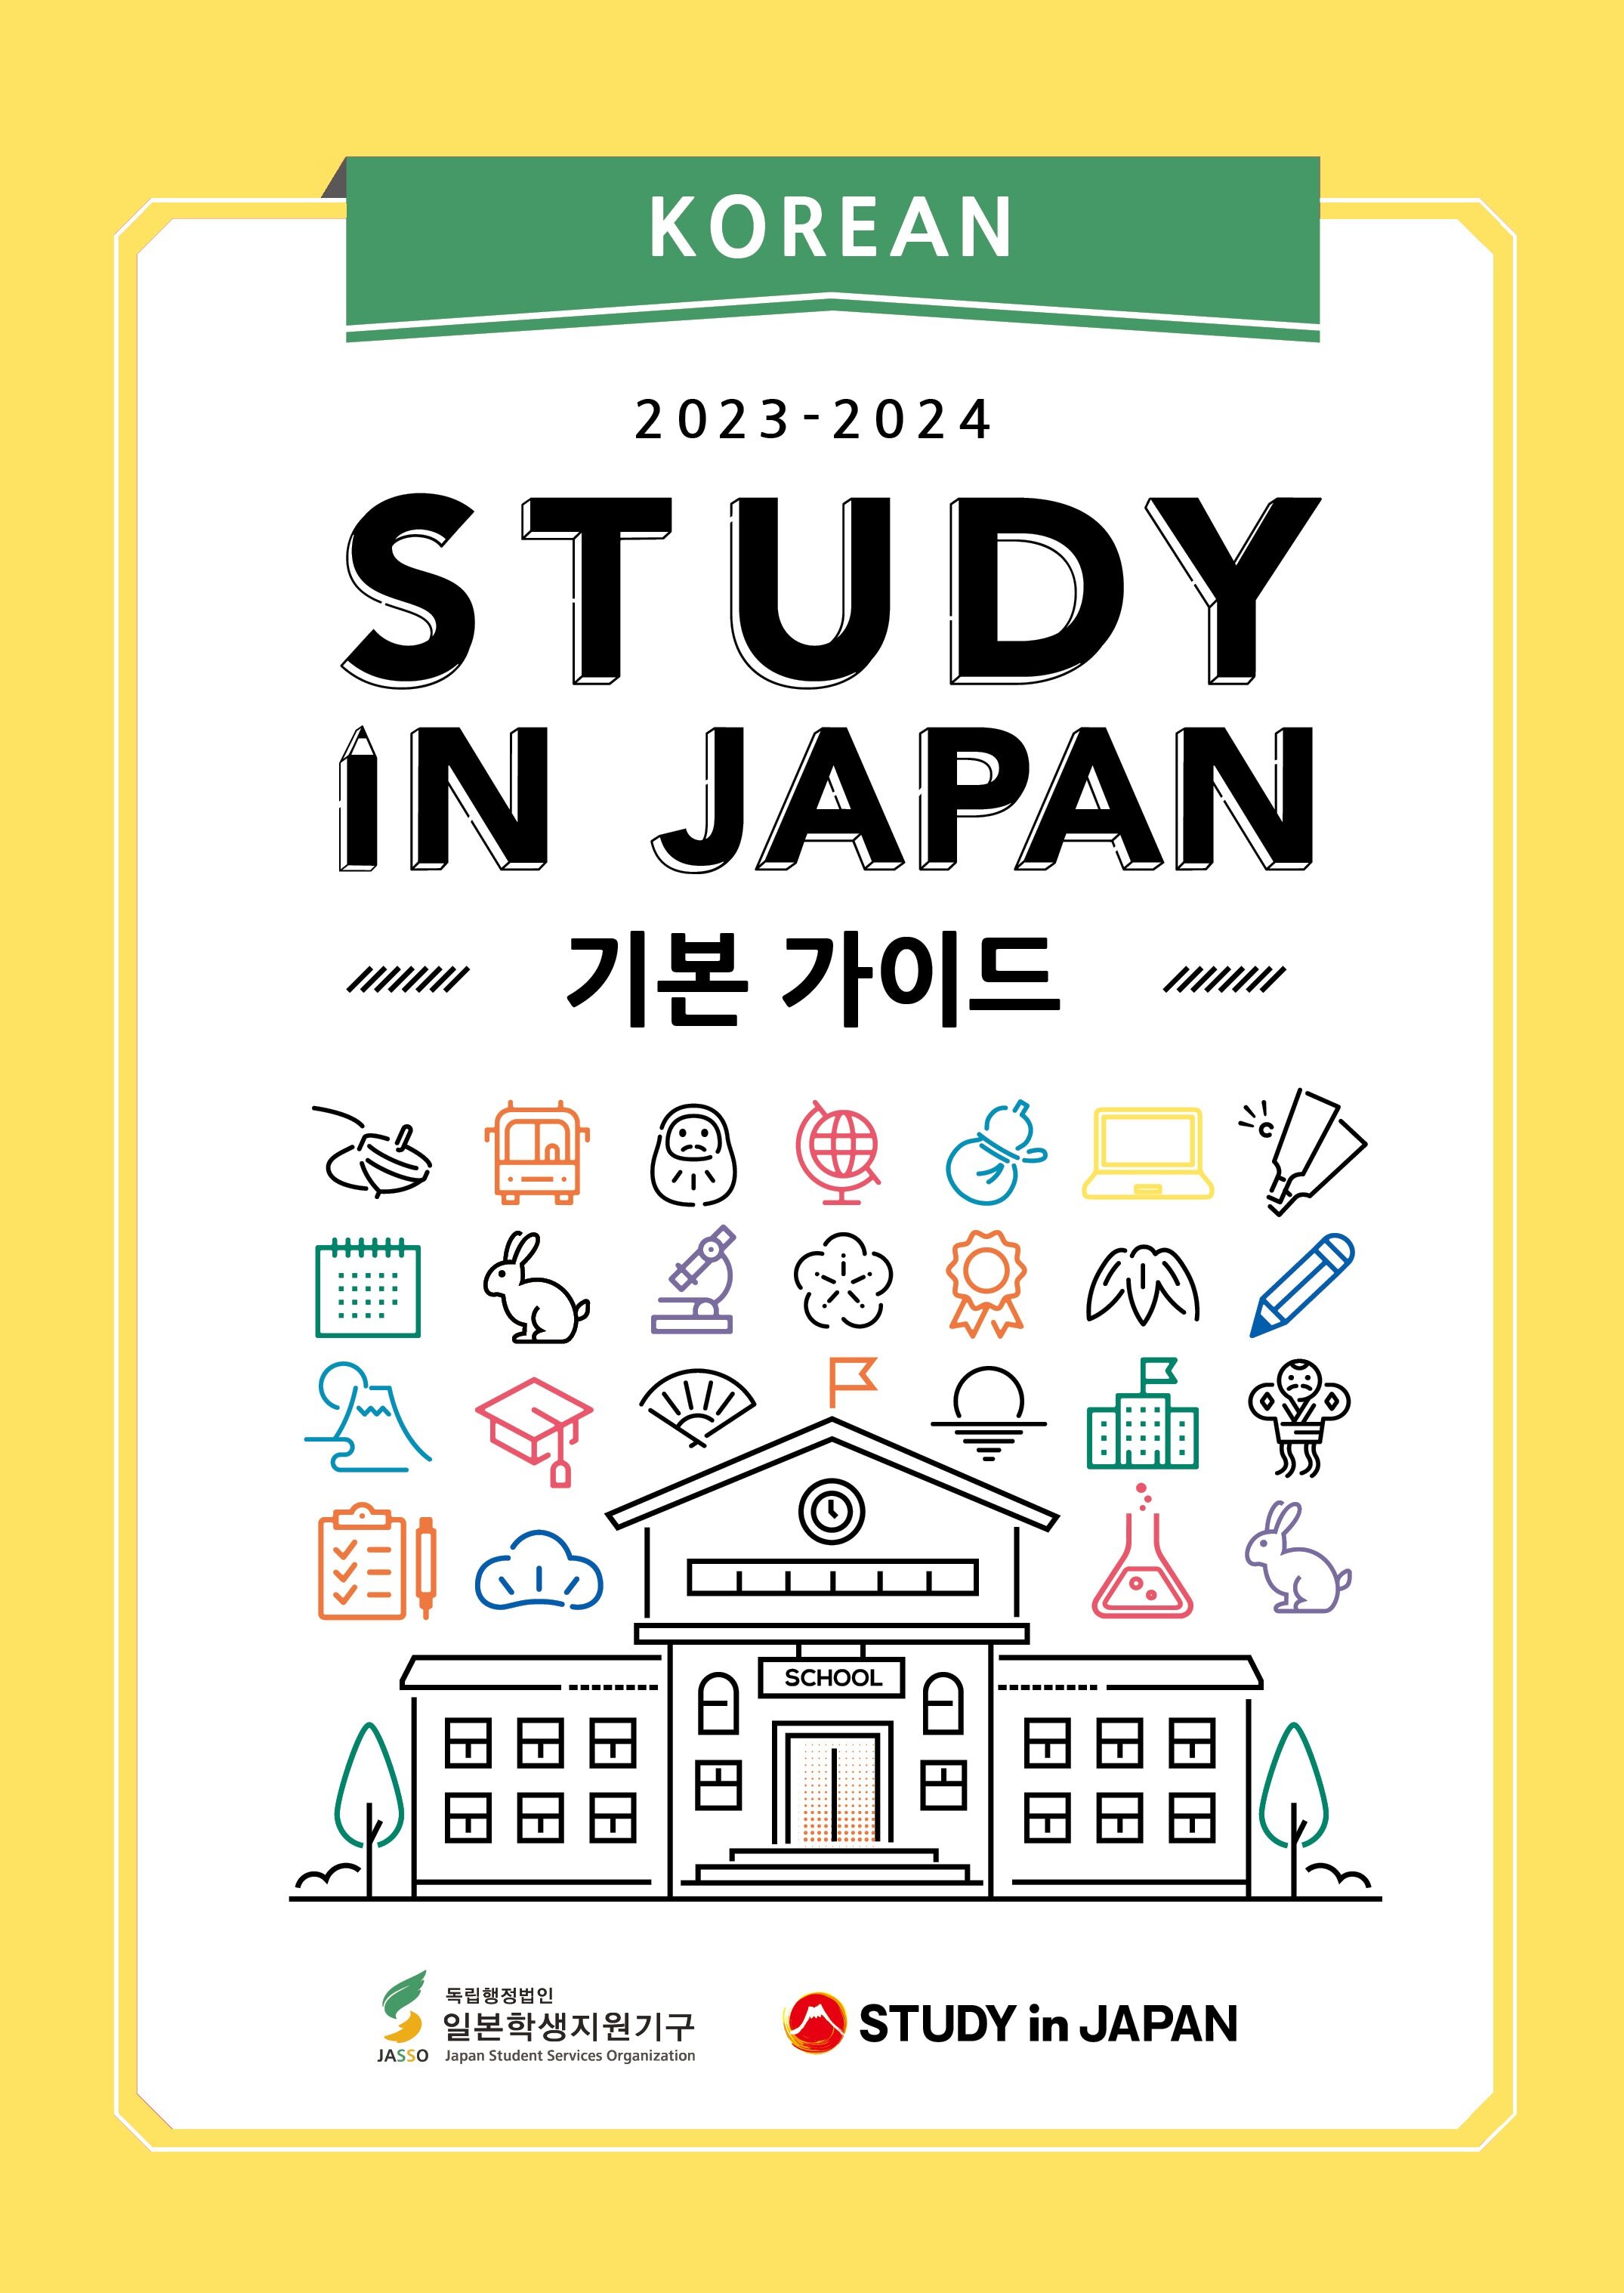 STUDY IN JAPAN 기본 가이드 (한국어어판)